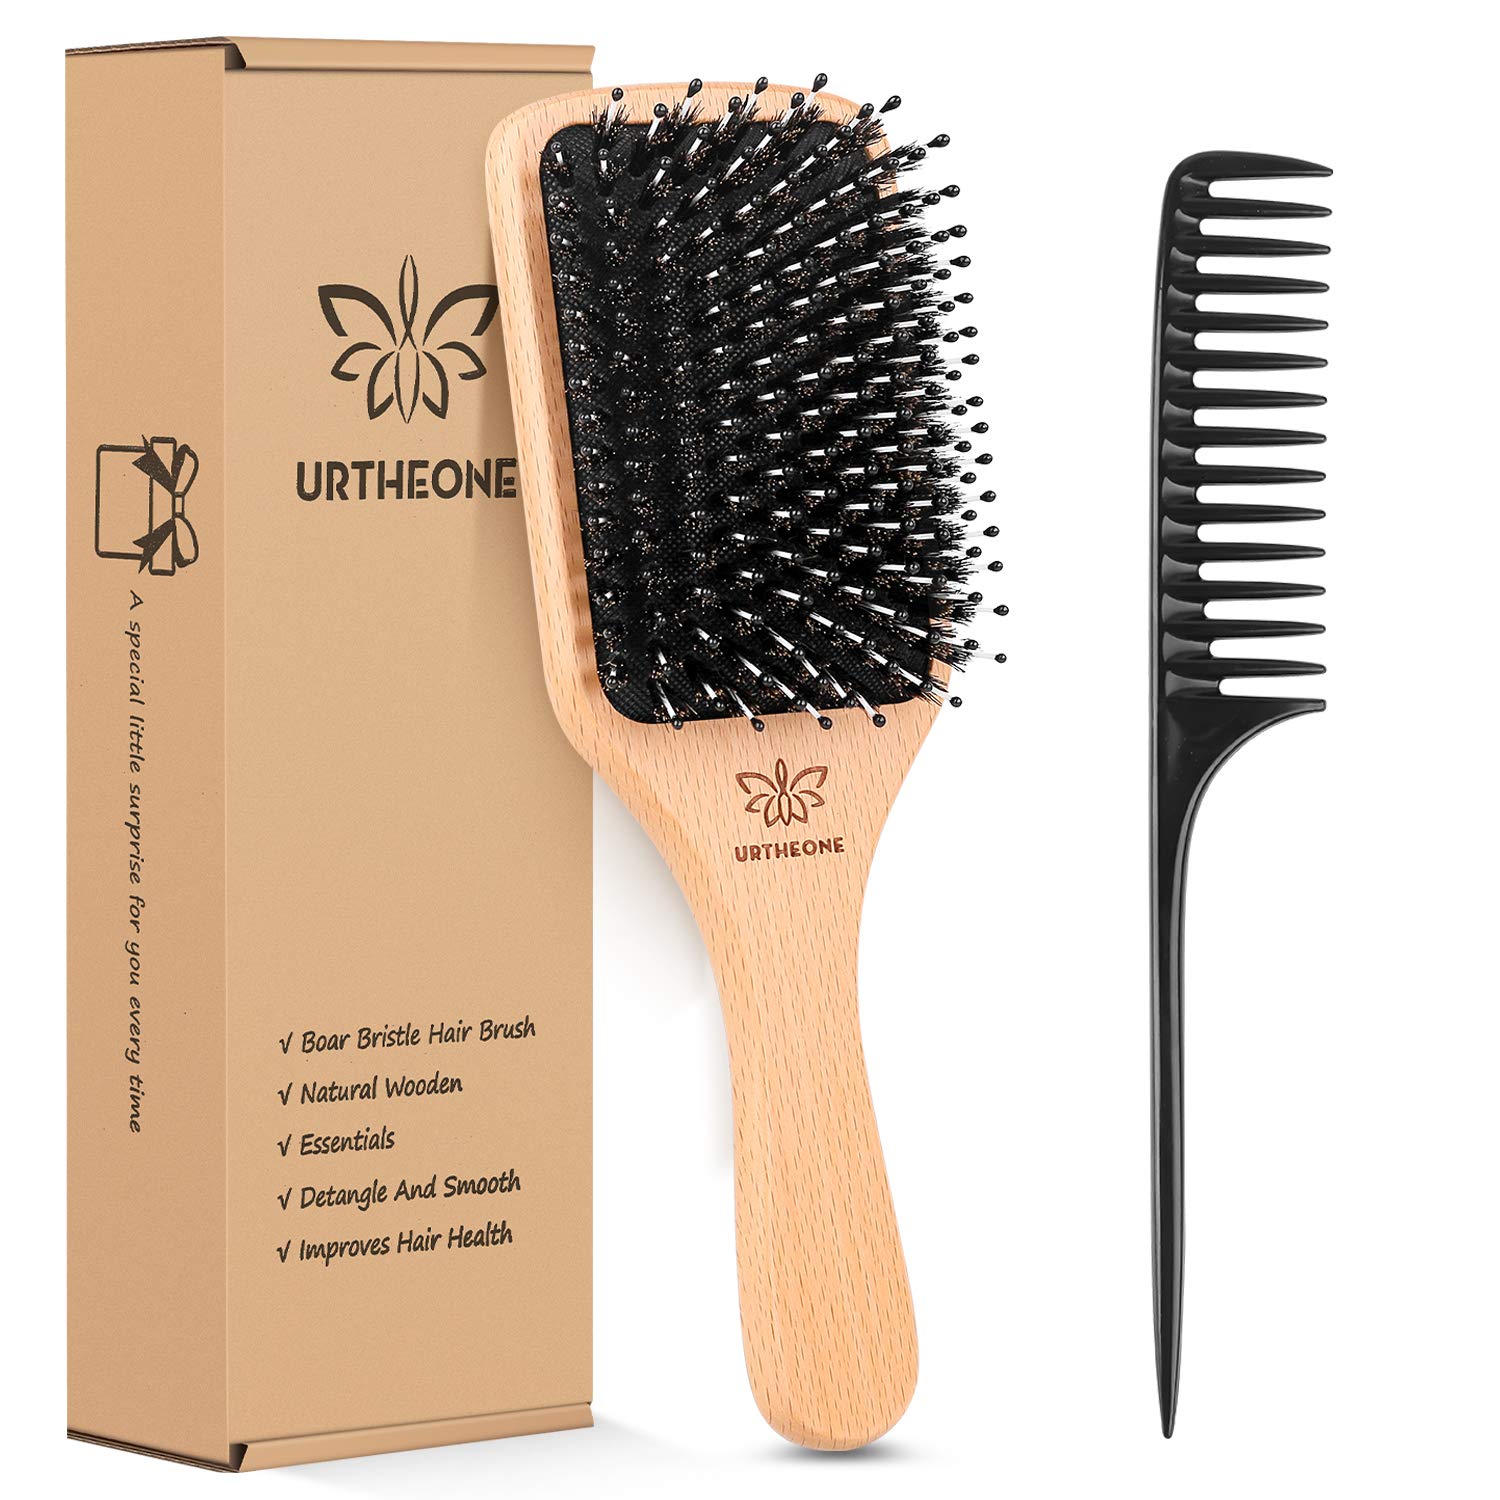 https://www.dontwasteyourmoney.com/wp-content/uploads/2020/08/urtheone-boar-bristle-hairbrush-comb-boar-brush.jpg